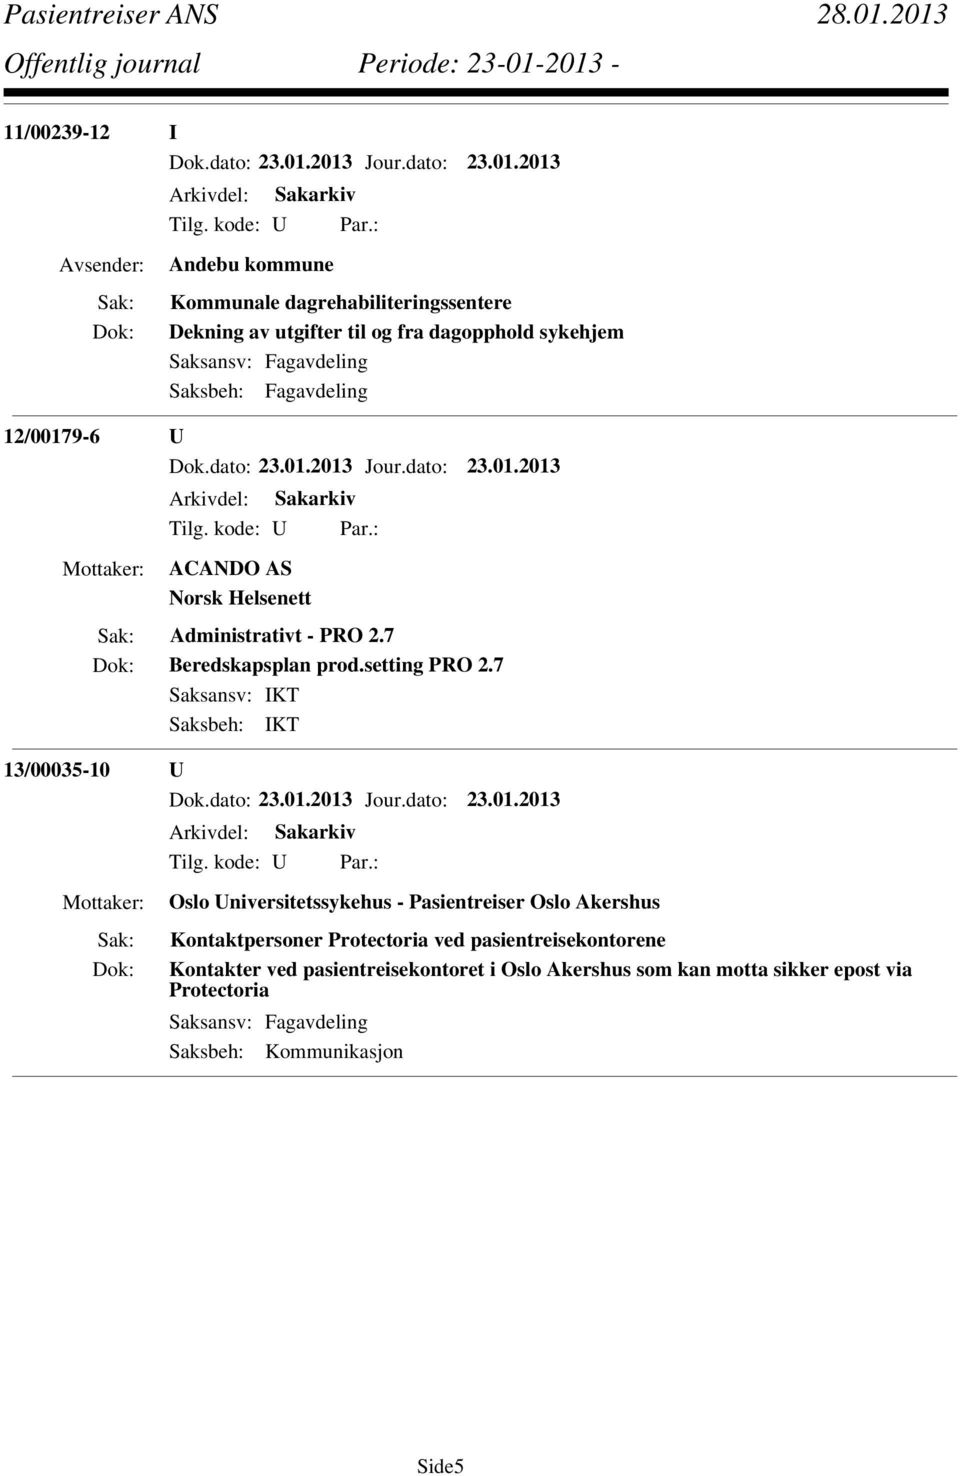 7 Saksansv: IKT Saksbeh: IKT 13/00035-10 U Oslo Universitetssykehus - Pasientreiser Oslo Akershus Kontaktpersoner